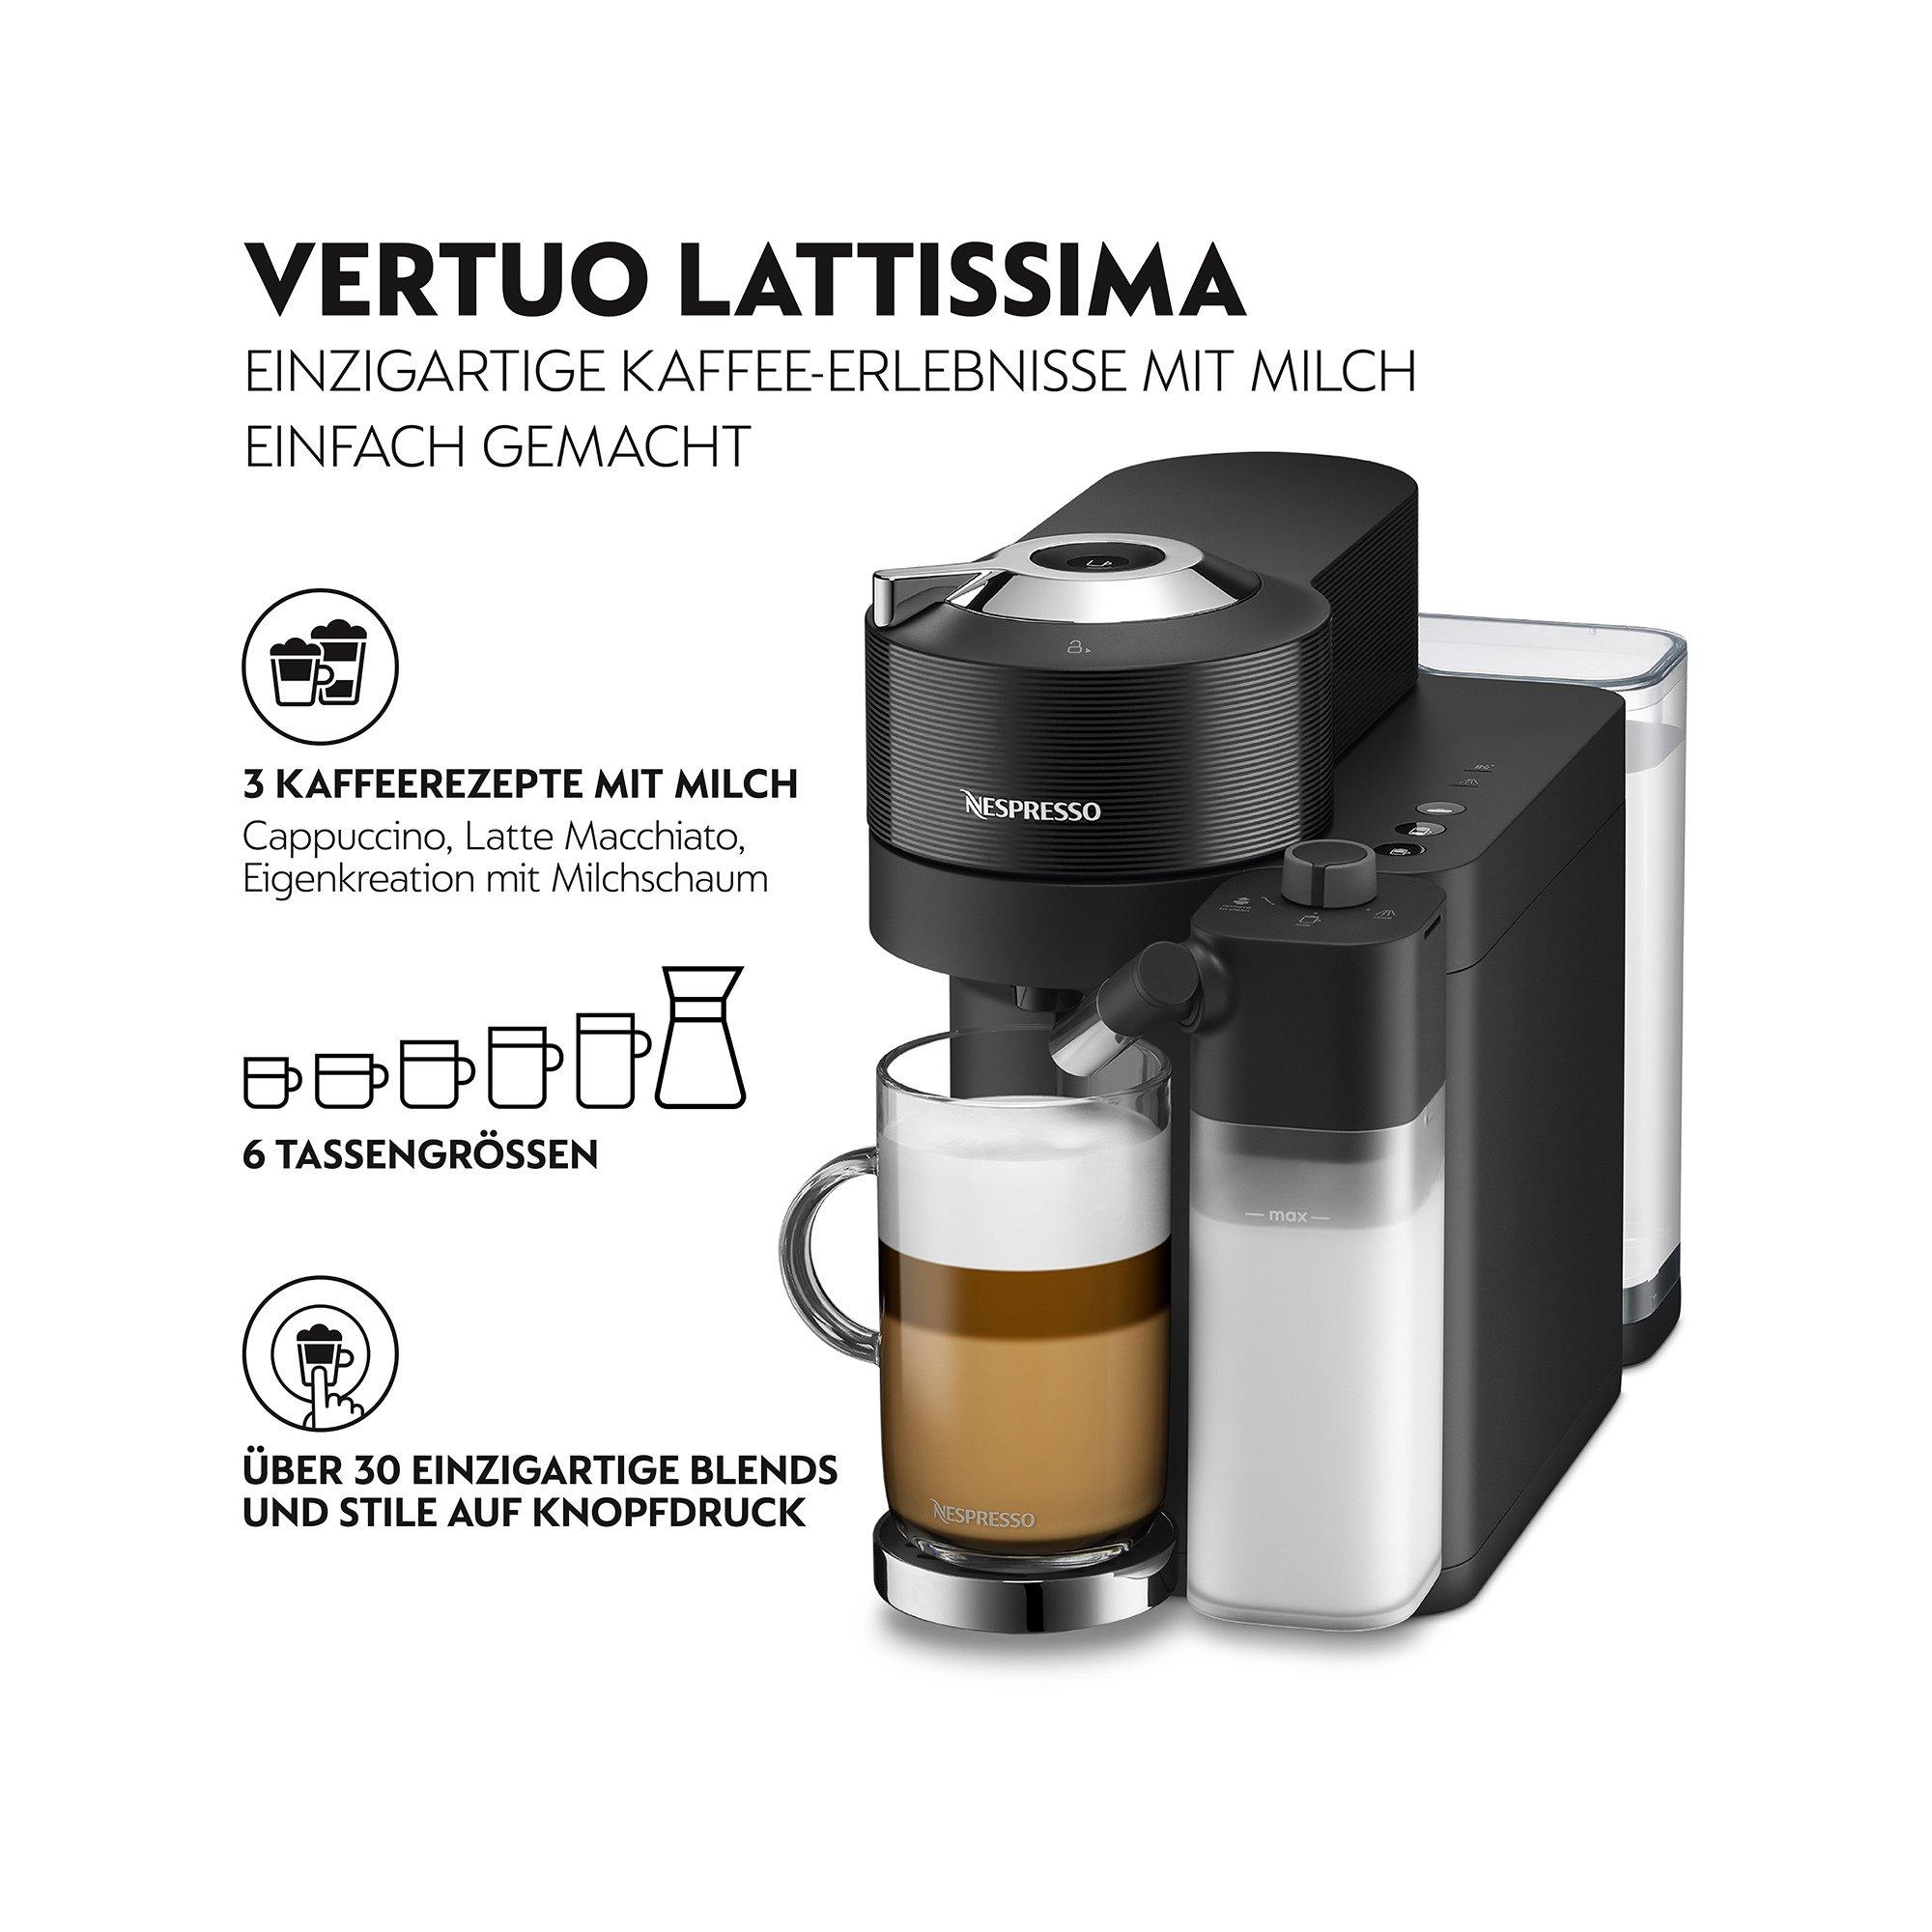 DeLonghi Nespressomaschine Vertuo Lattissima ENV300.B 